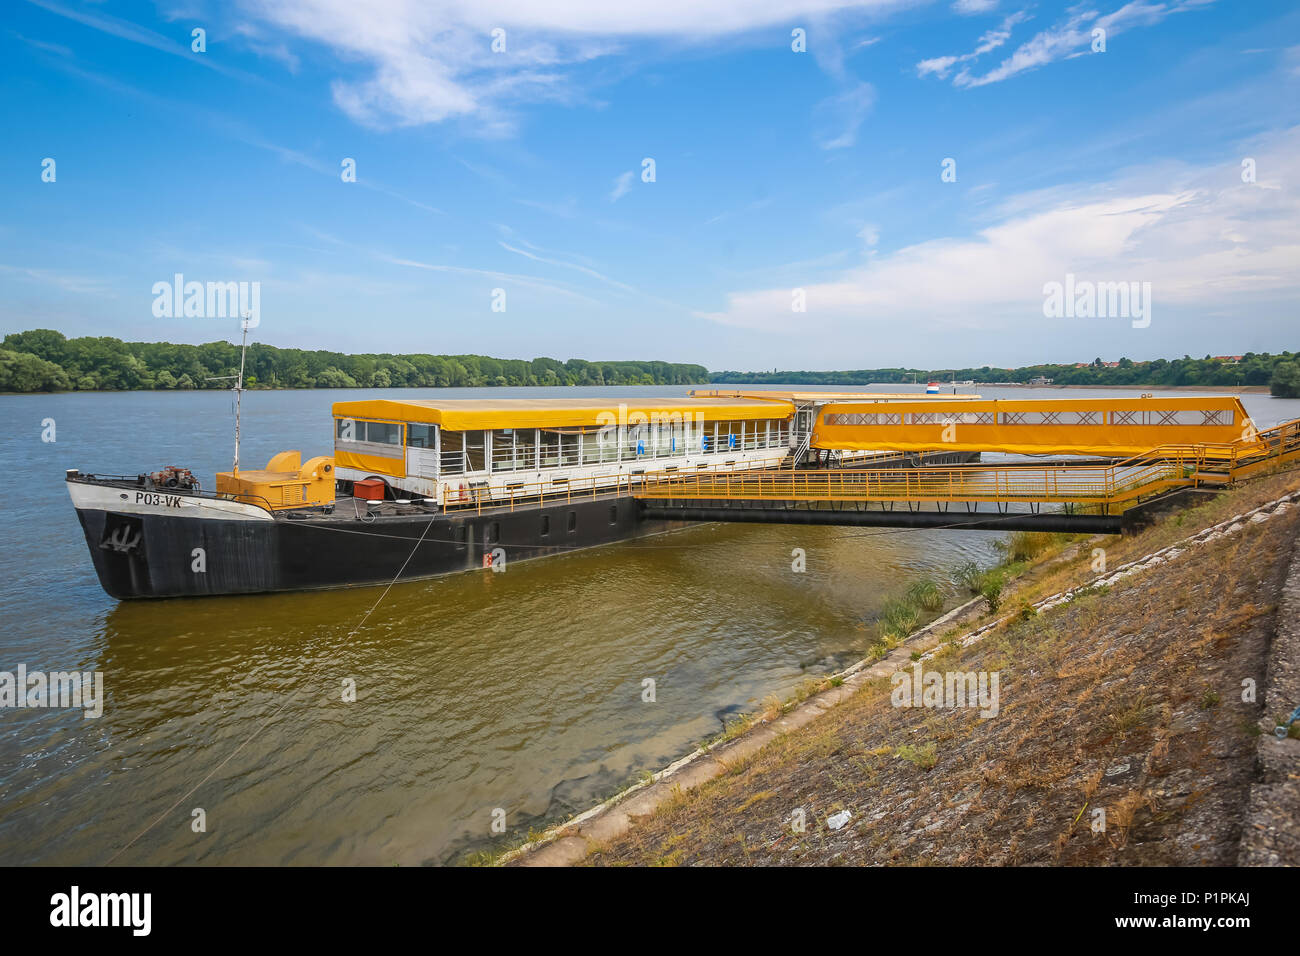 VUKOVAR, CROATIA - MAY 14, 2018 : View of a tourist ship moored on the coast of the river Danube in Vukovar, Croatia. Stock Photo